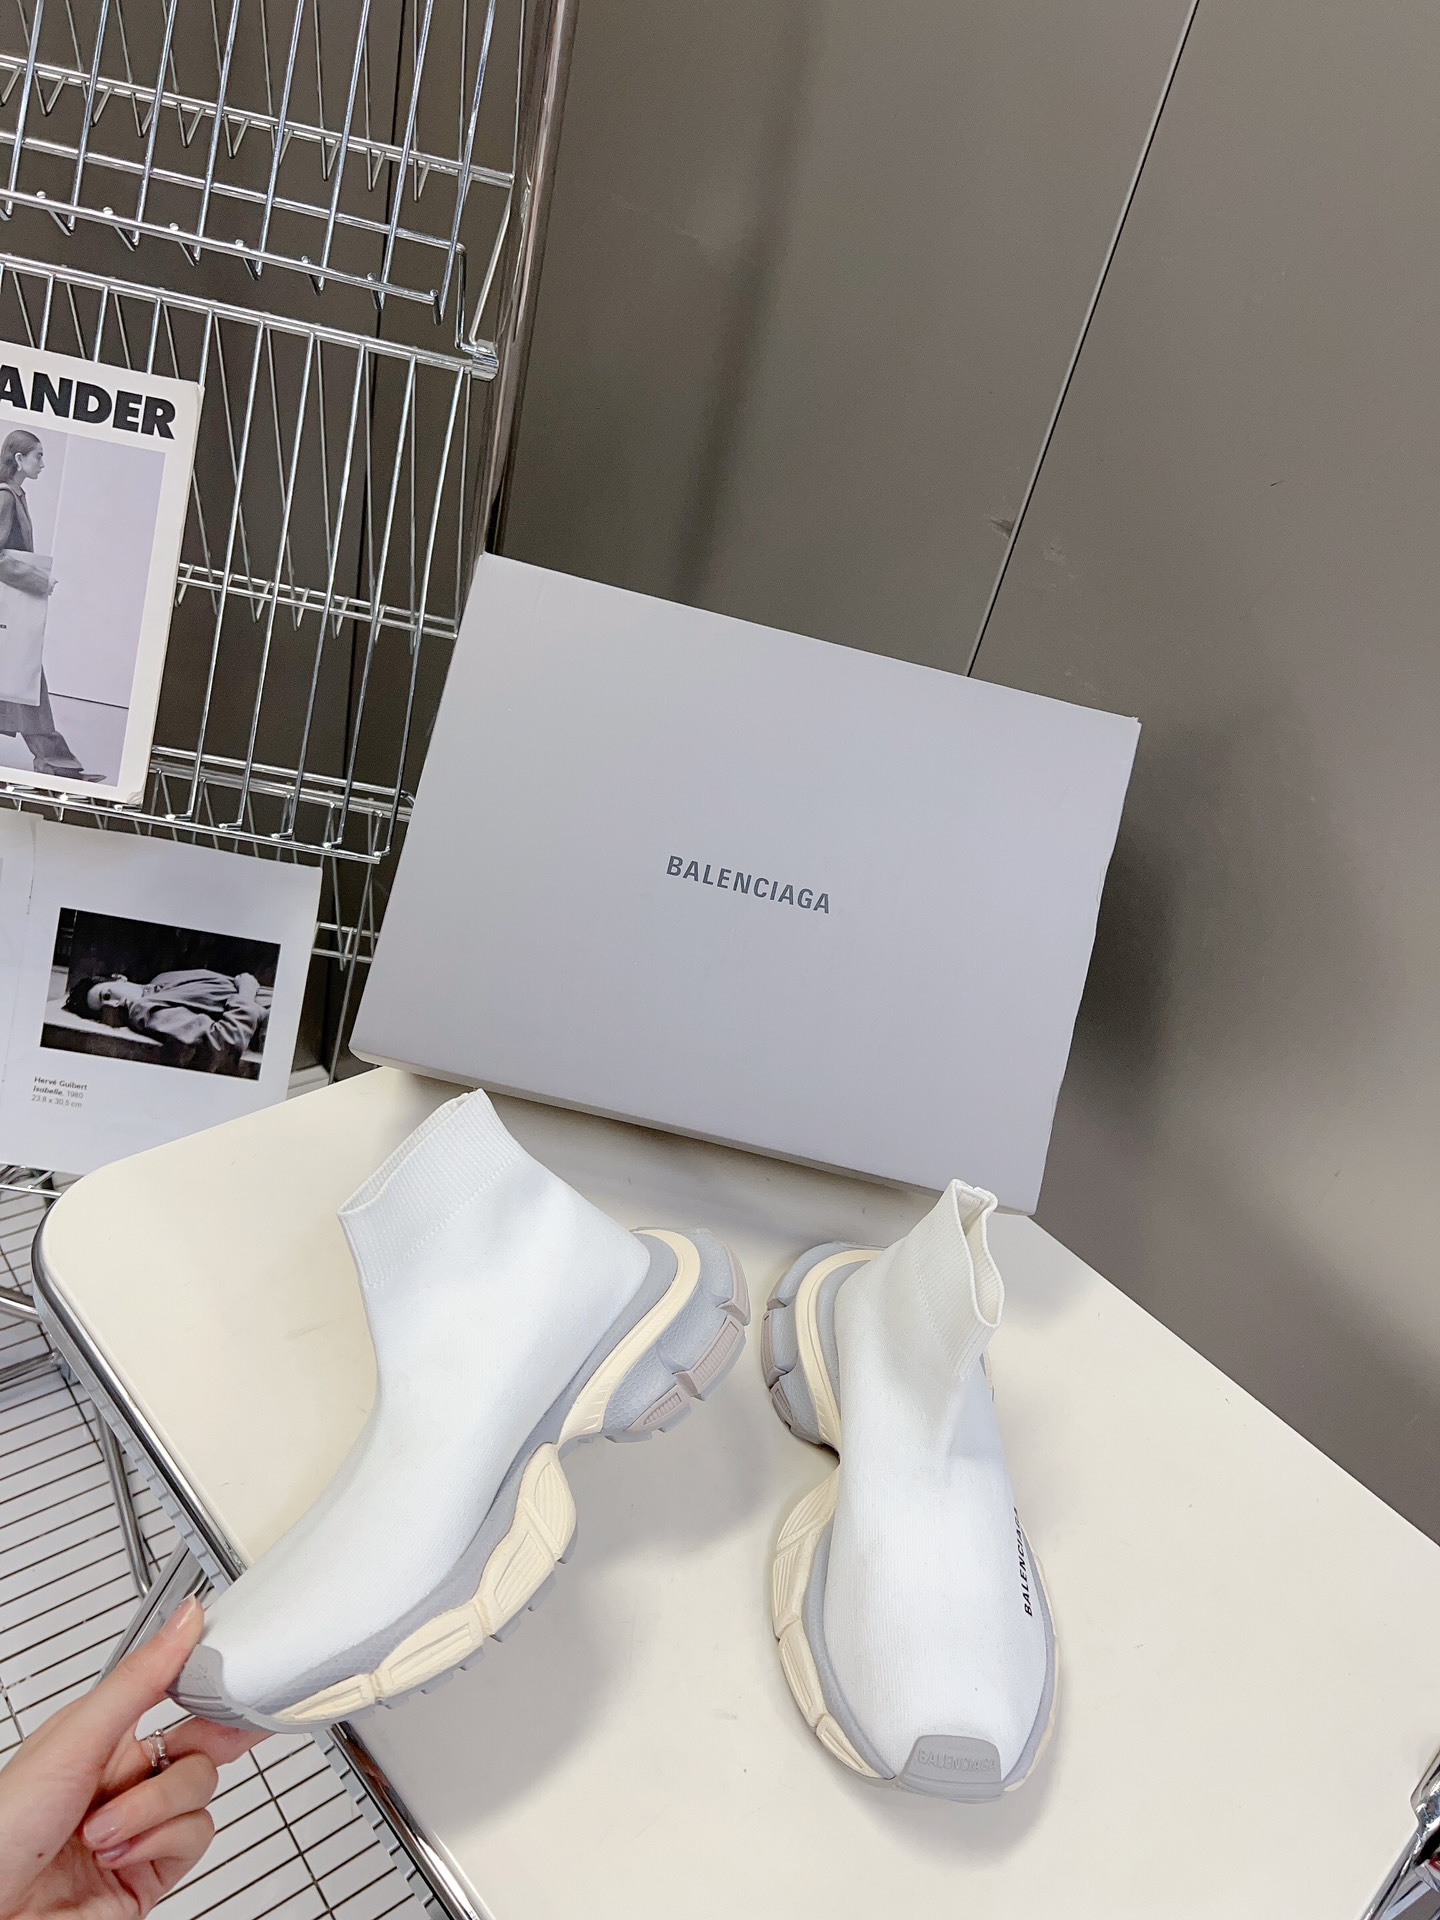 BALENCIAGA巴黎世家3XL出袜子鞋了复古休闲运动鞋系列推出探索时尚界对于原创与挪用的概念以全新系